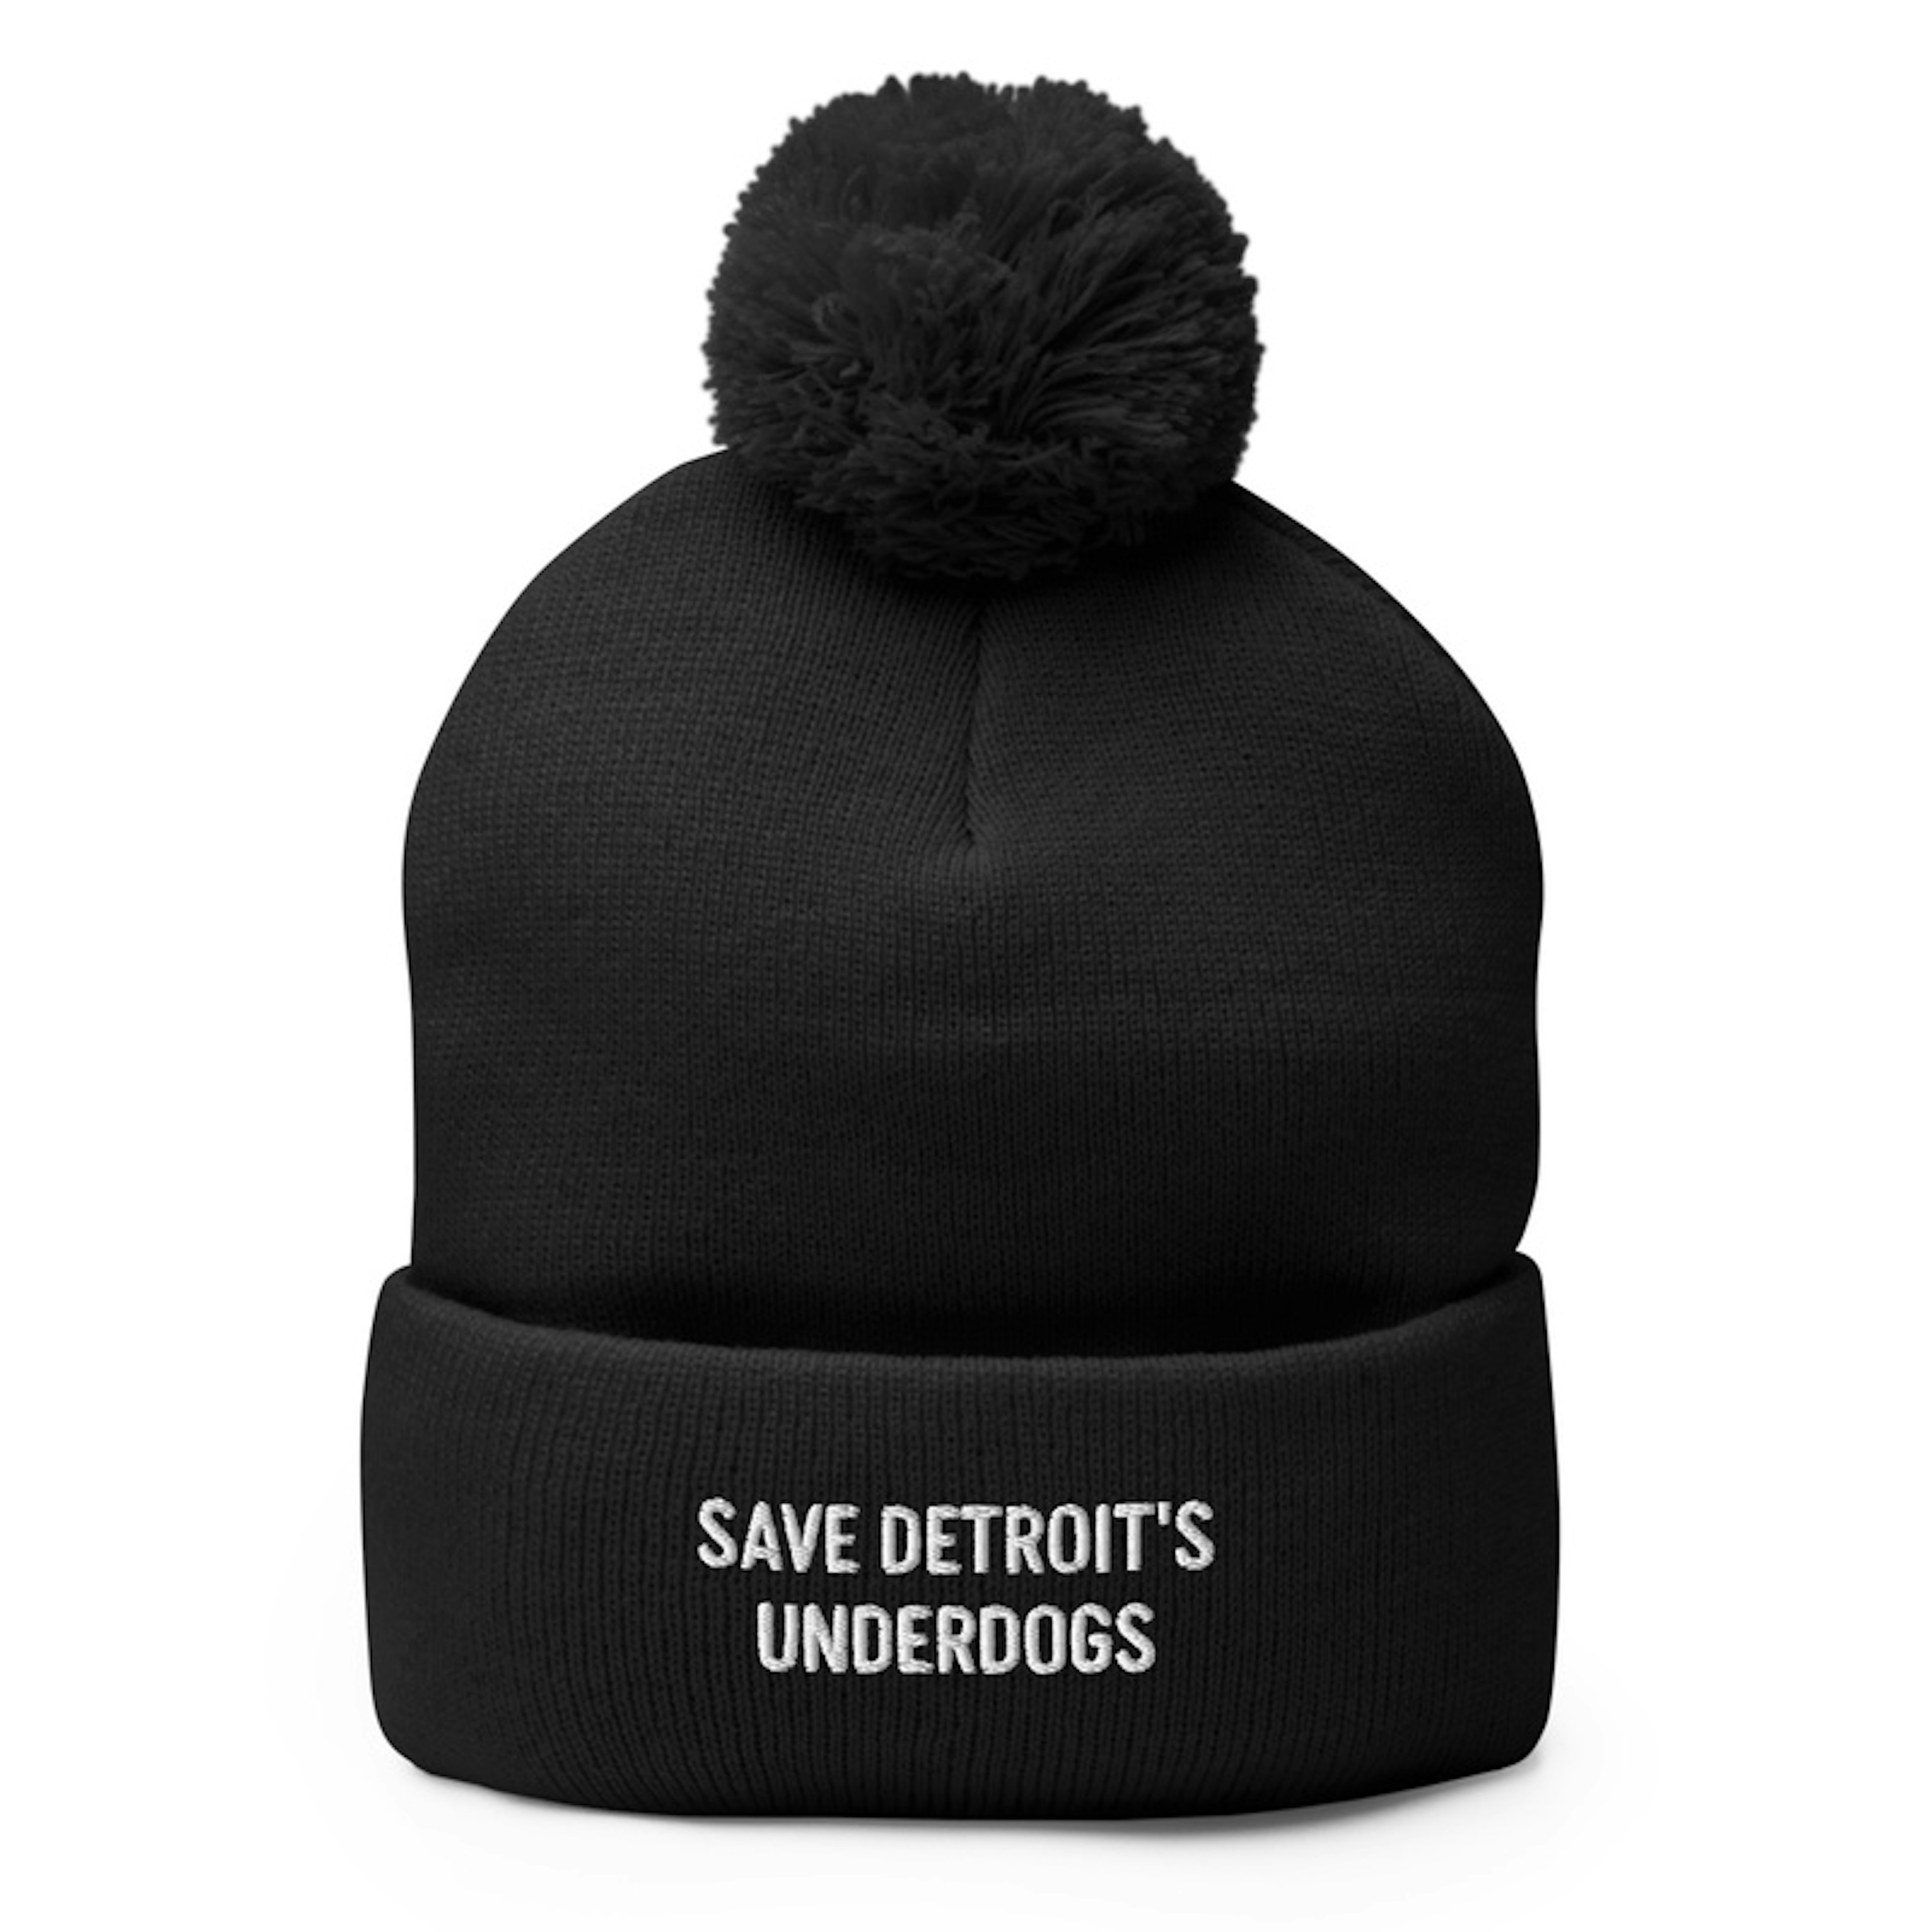 Save Detroit's Underdogs